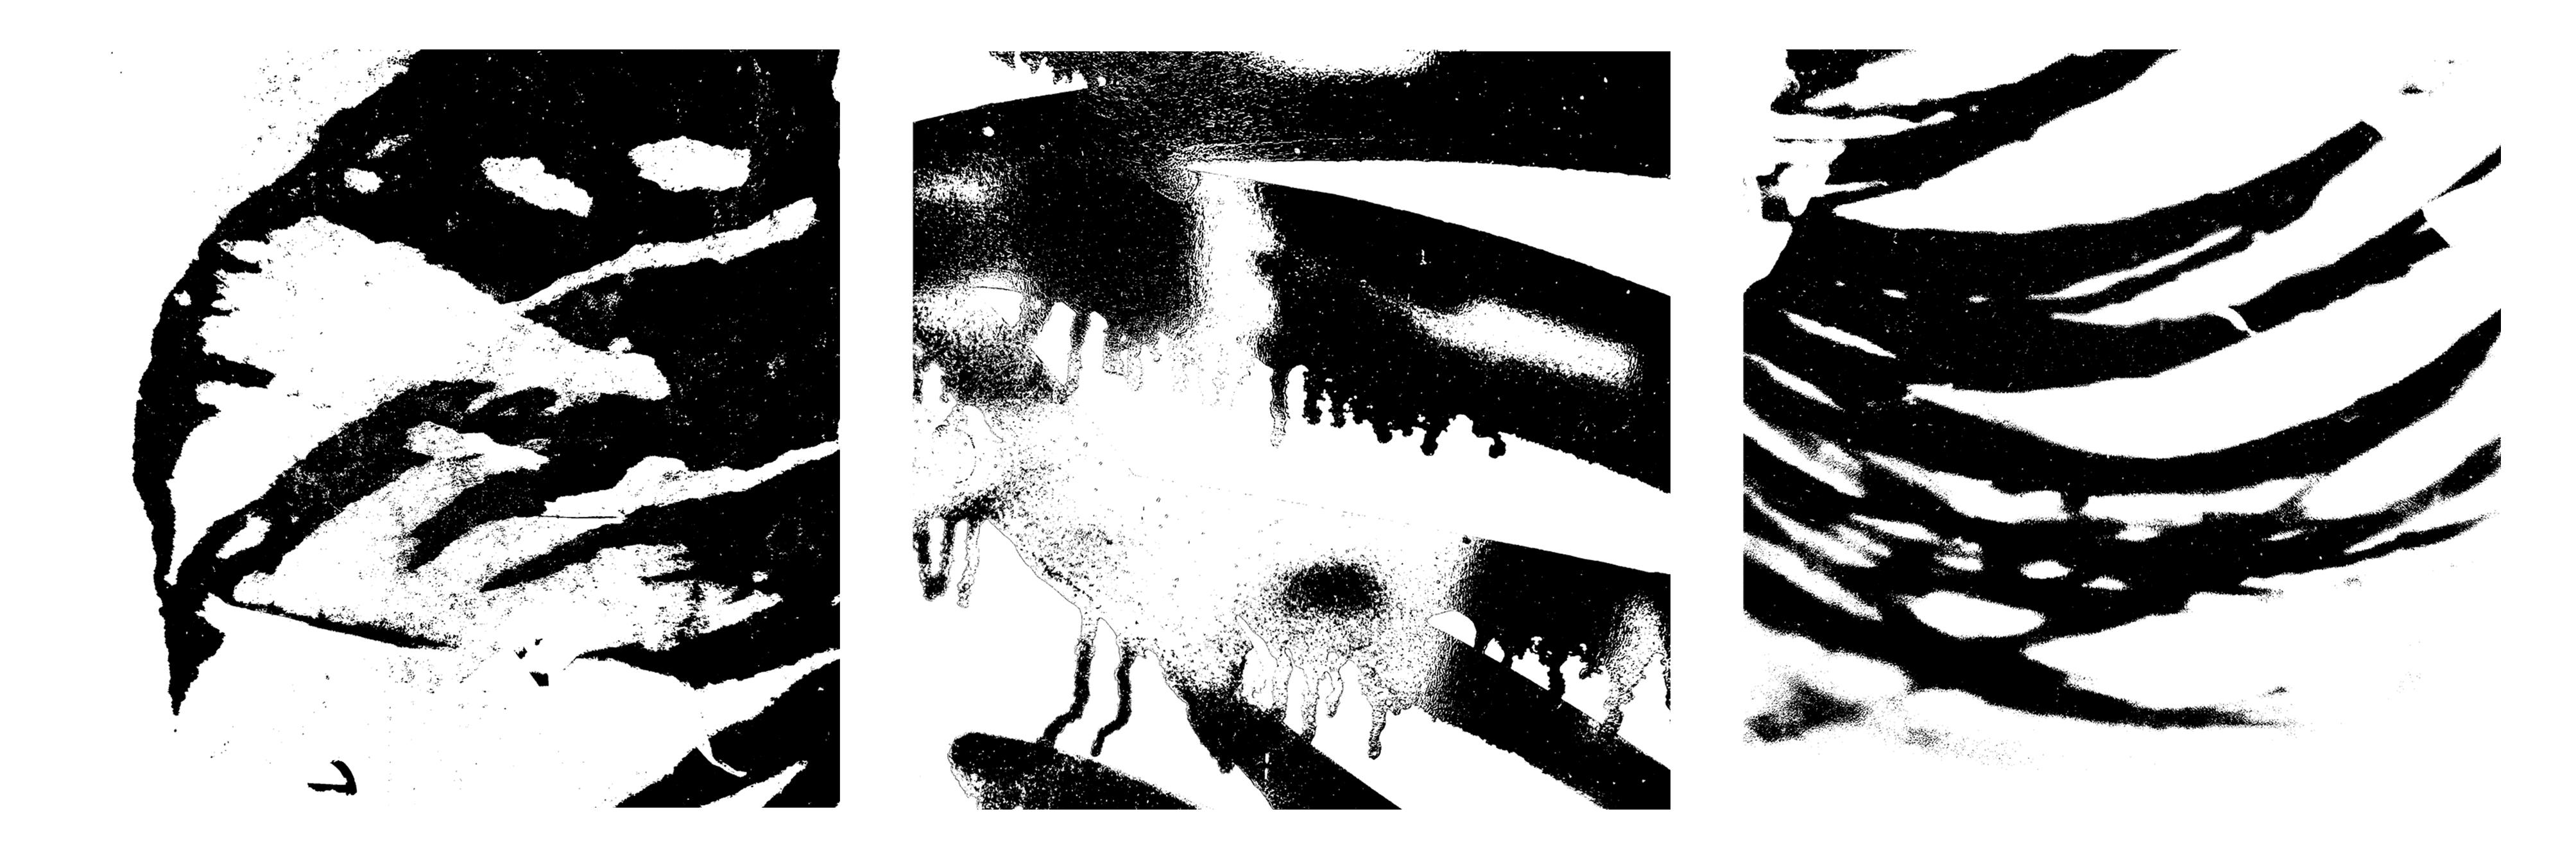 Chris MaGee Black and White Photograph – "Shadows Kept Alive No.16", signierter und nummerierter Giclée-Druck, Hahnemühle-Papier